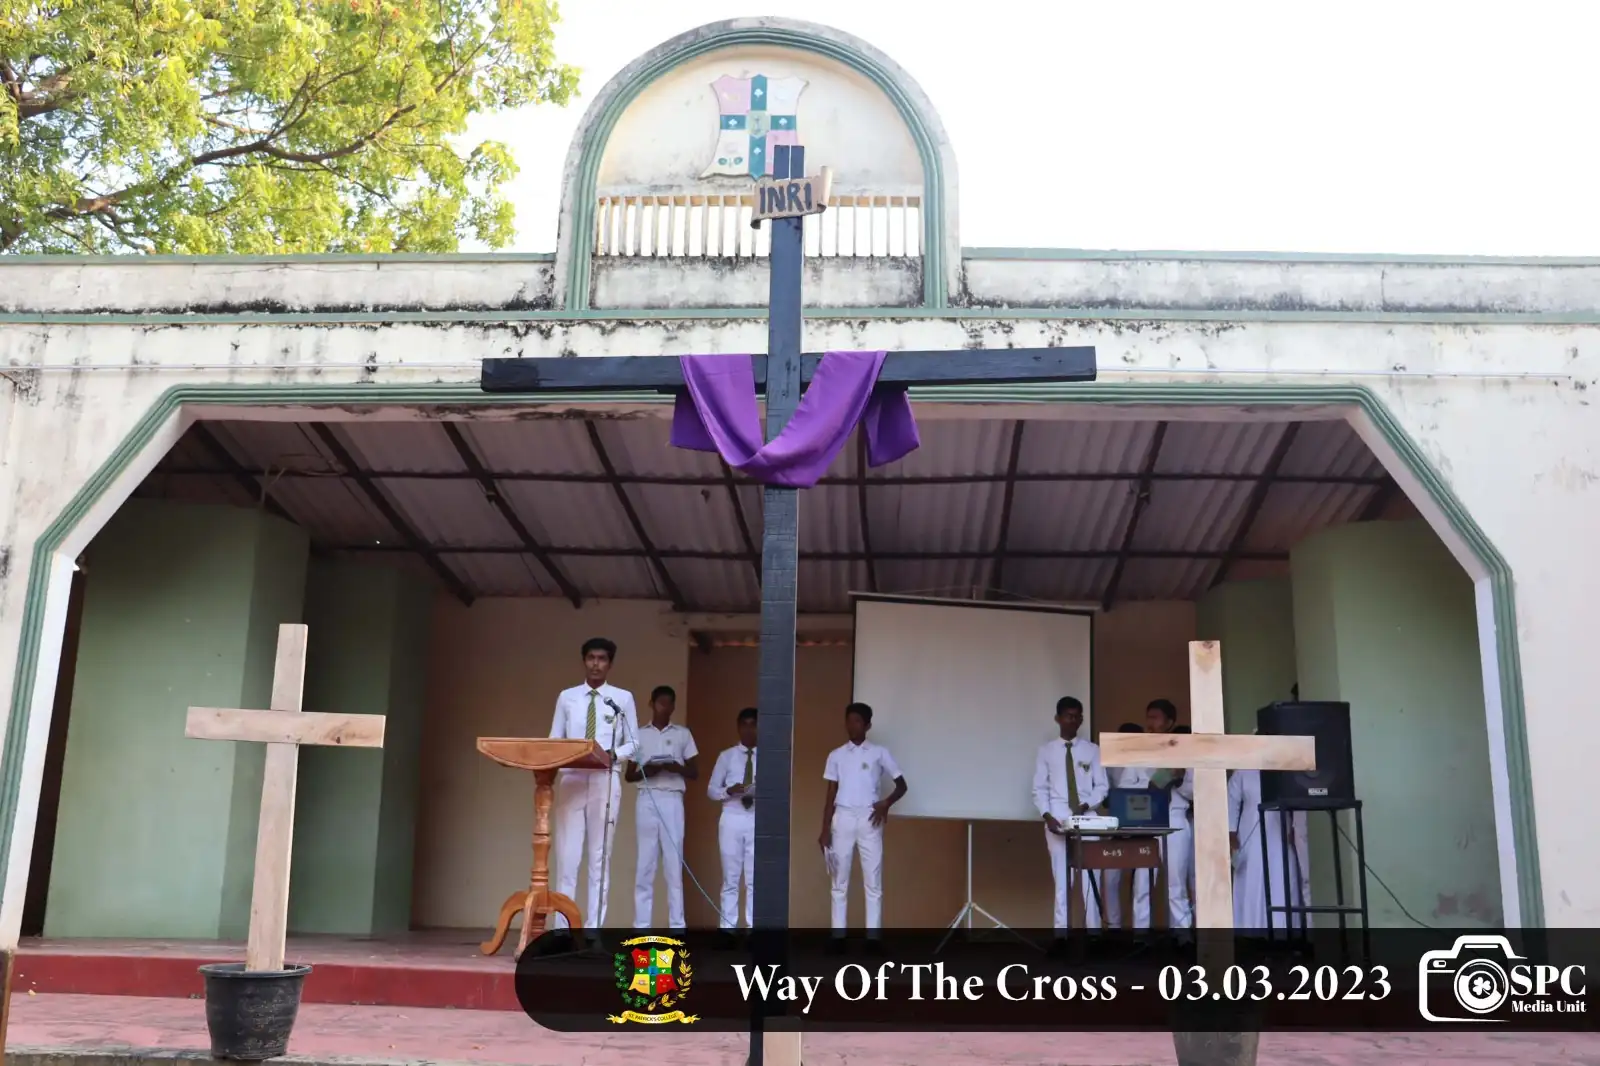 Journey of the Cross Feb 03